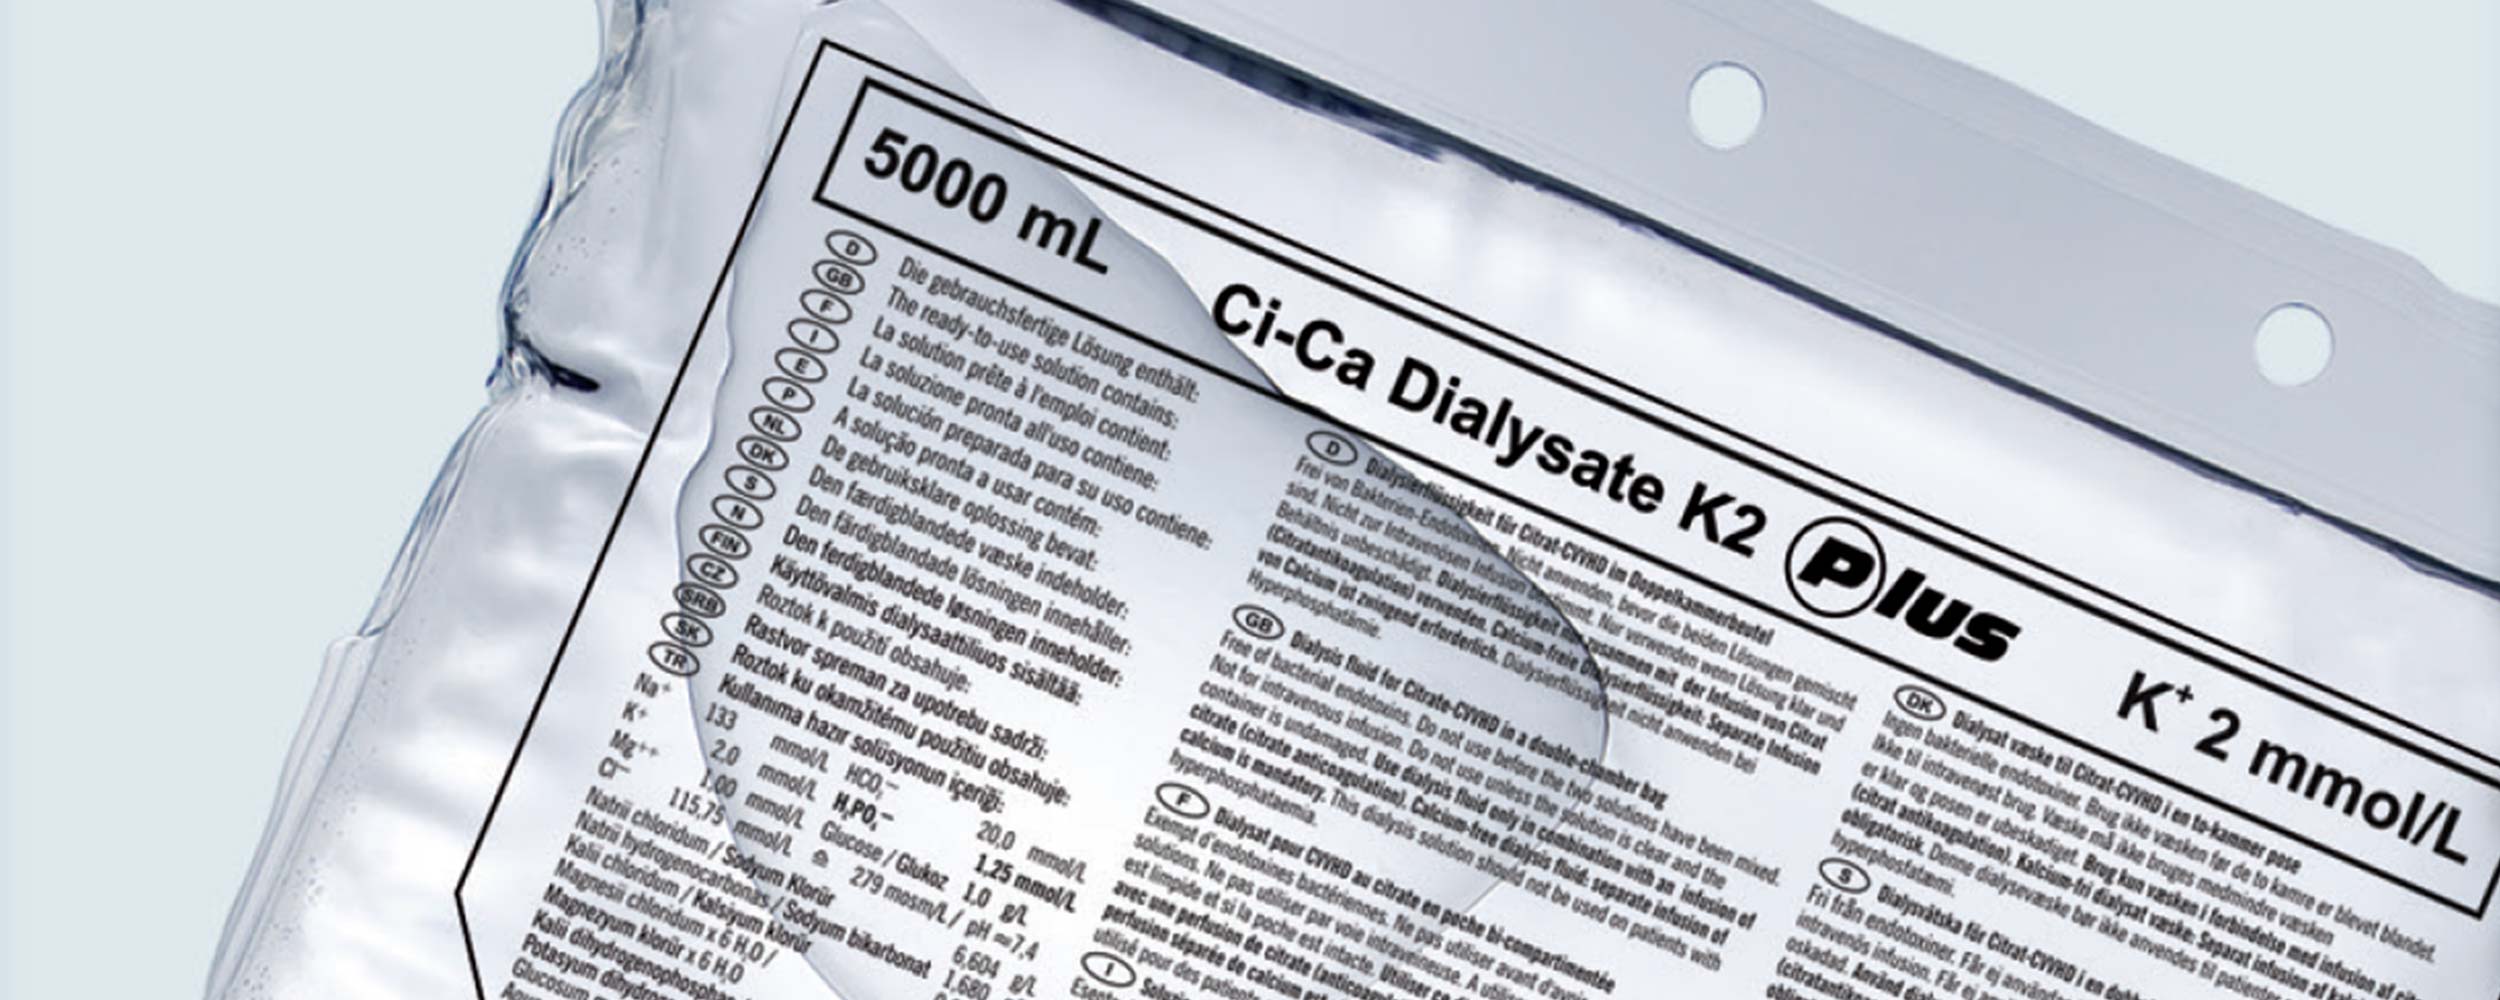 Lösungsbeutel mit Ci-Ca® Dialysate Plus